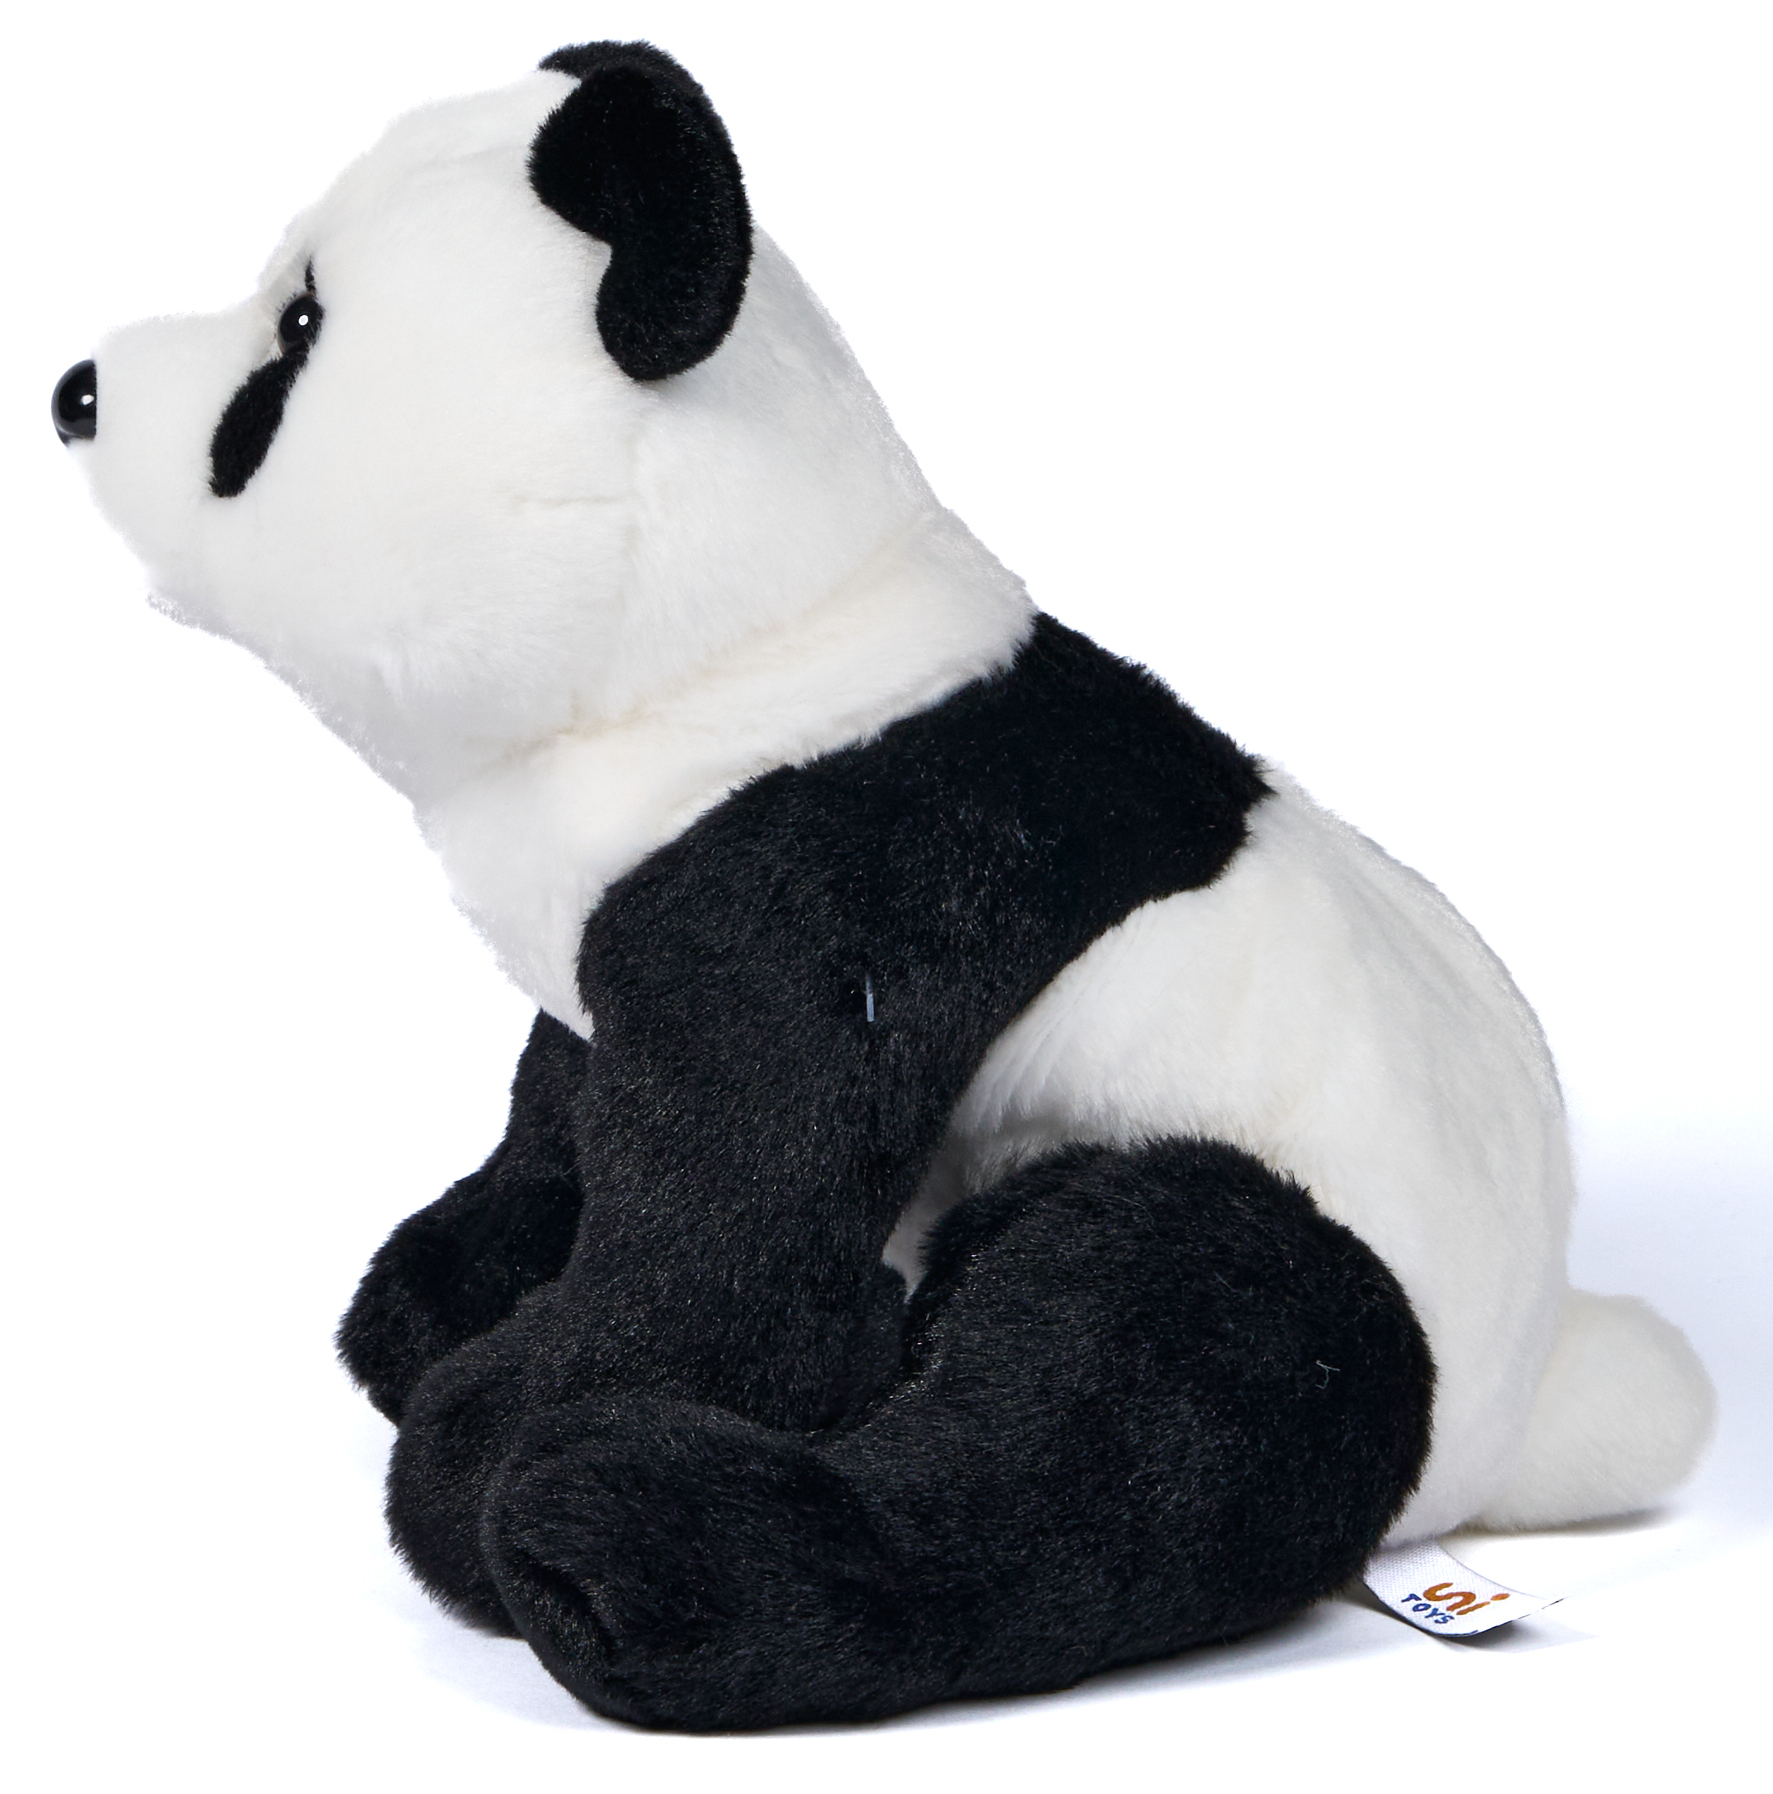 Panda bear, sitting - 24 cm (height)